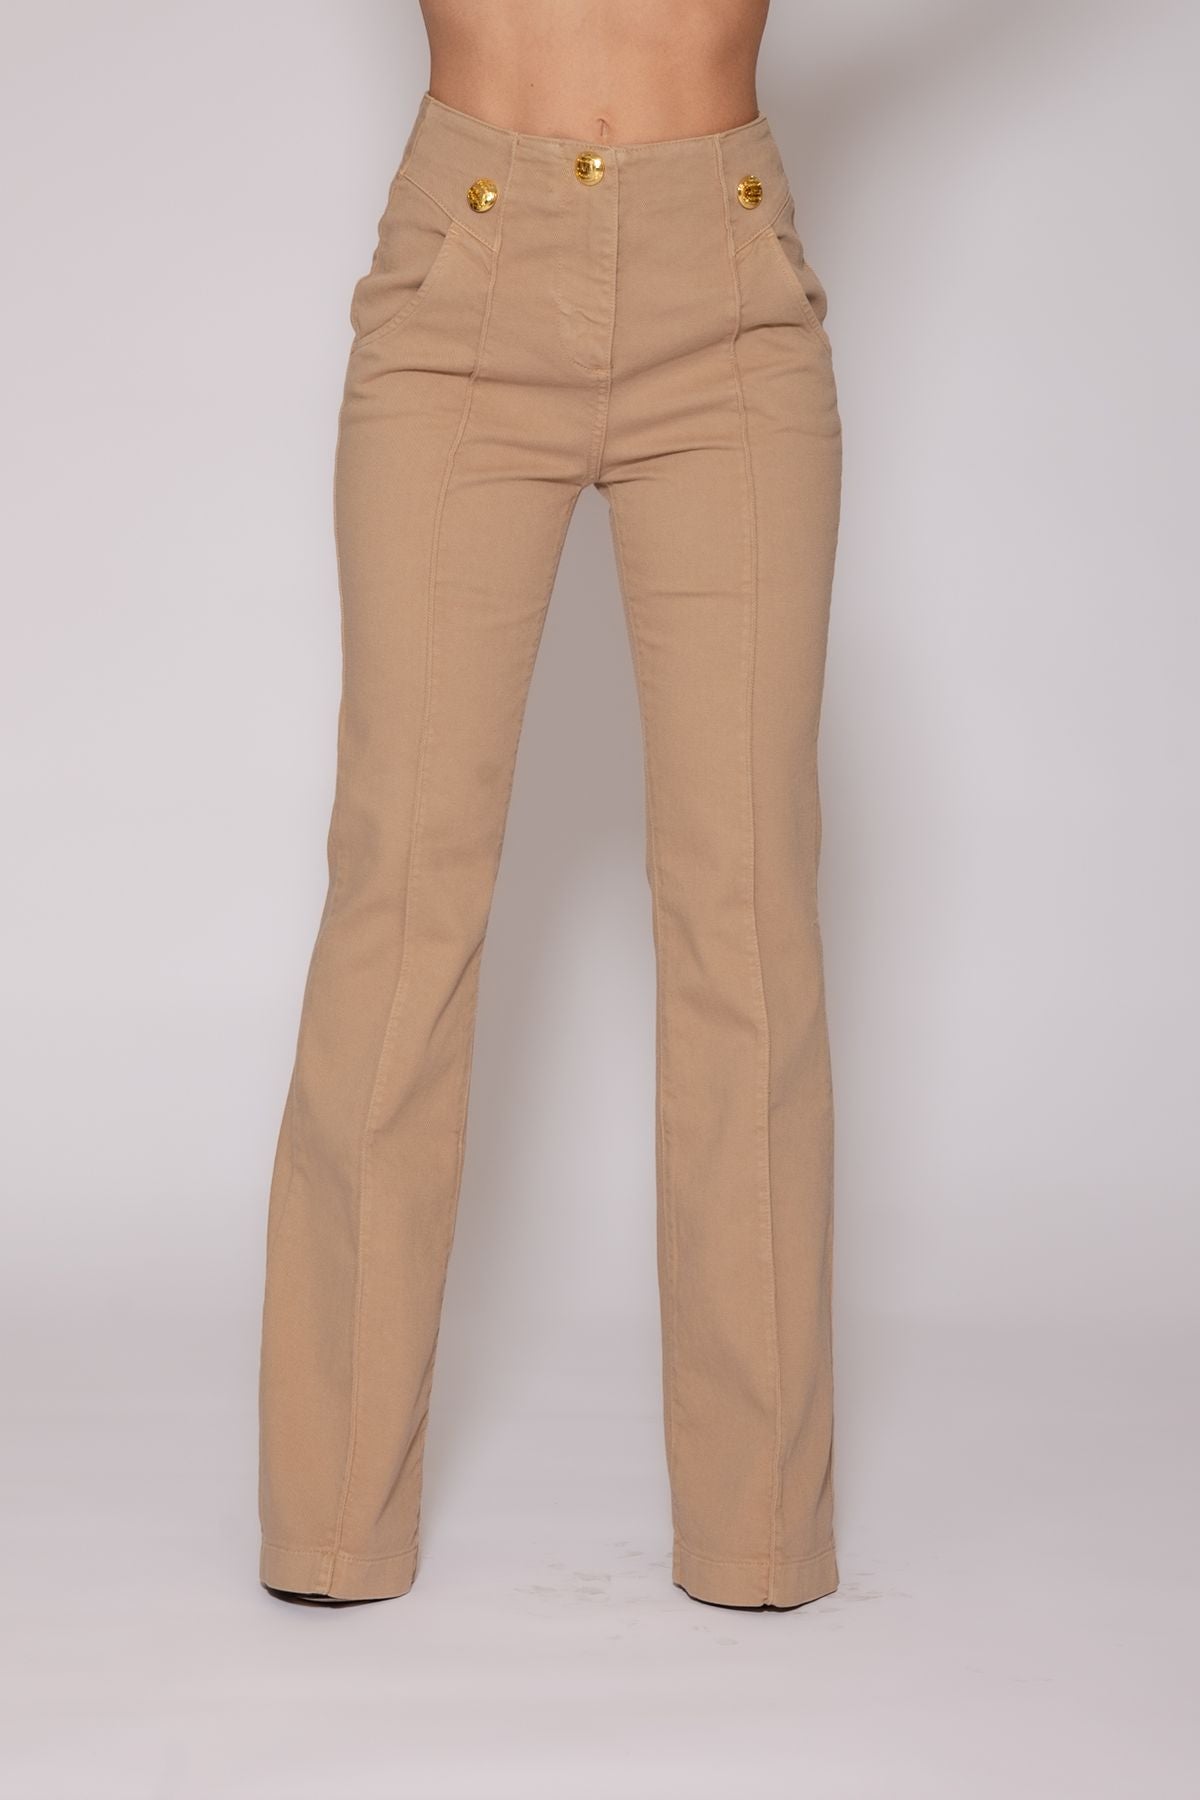 gbdp19759 - pantalone - GAELLE PARIS